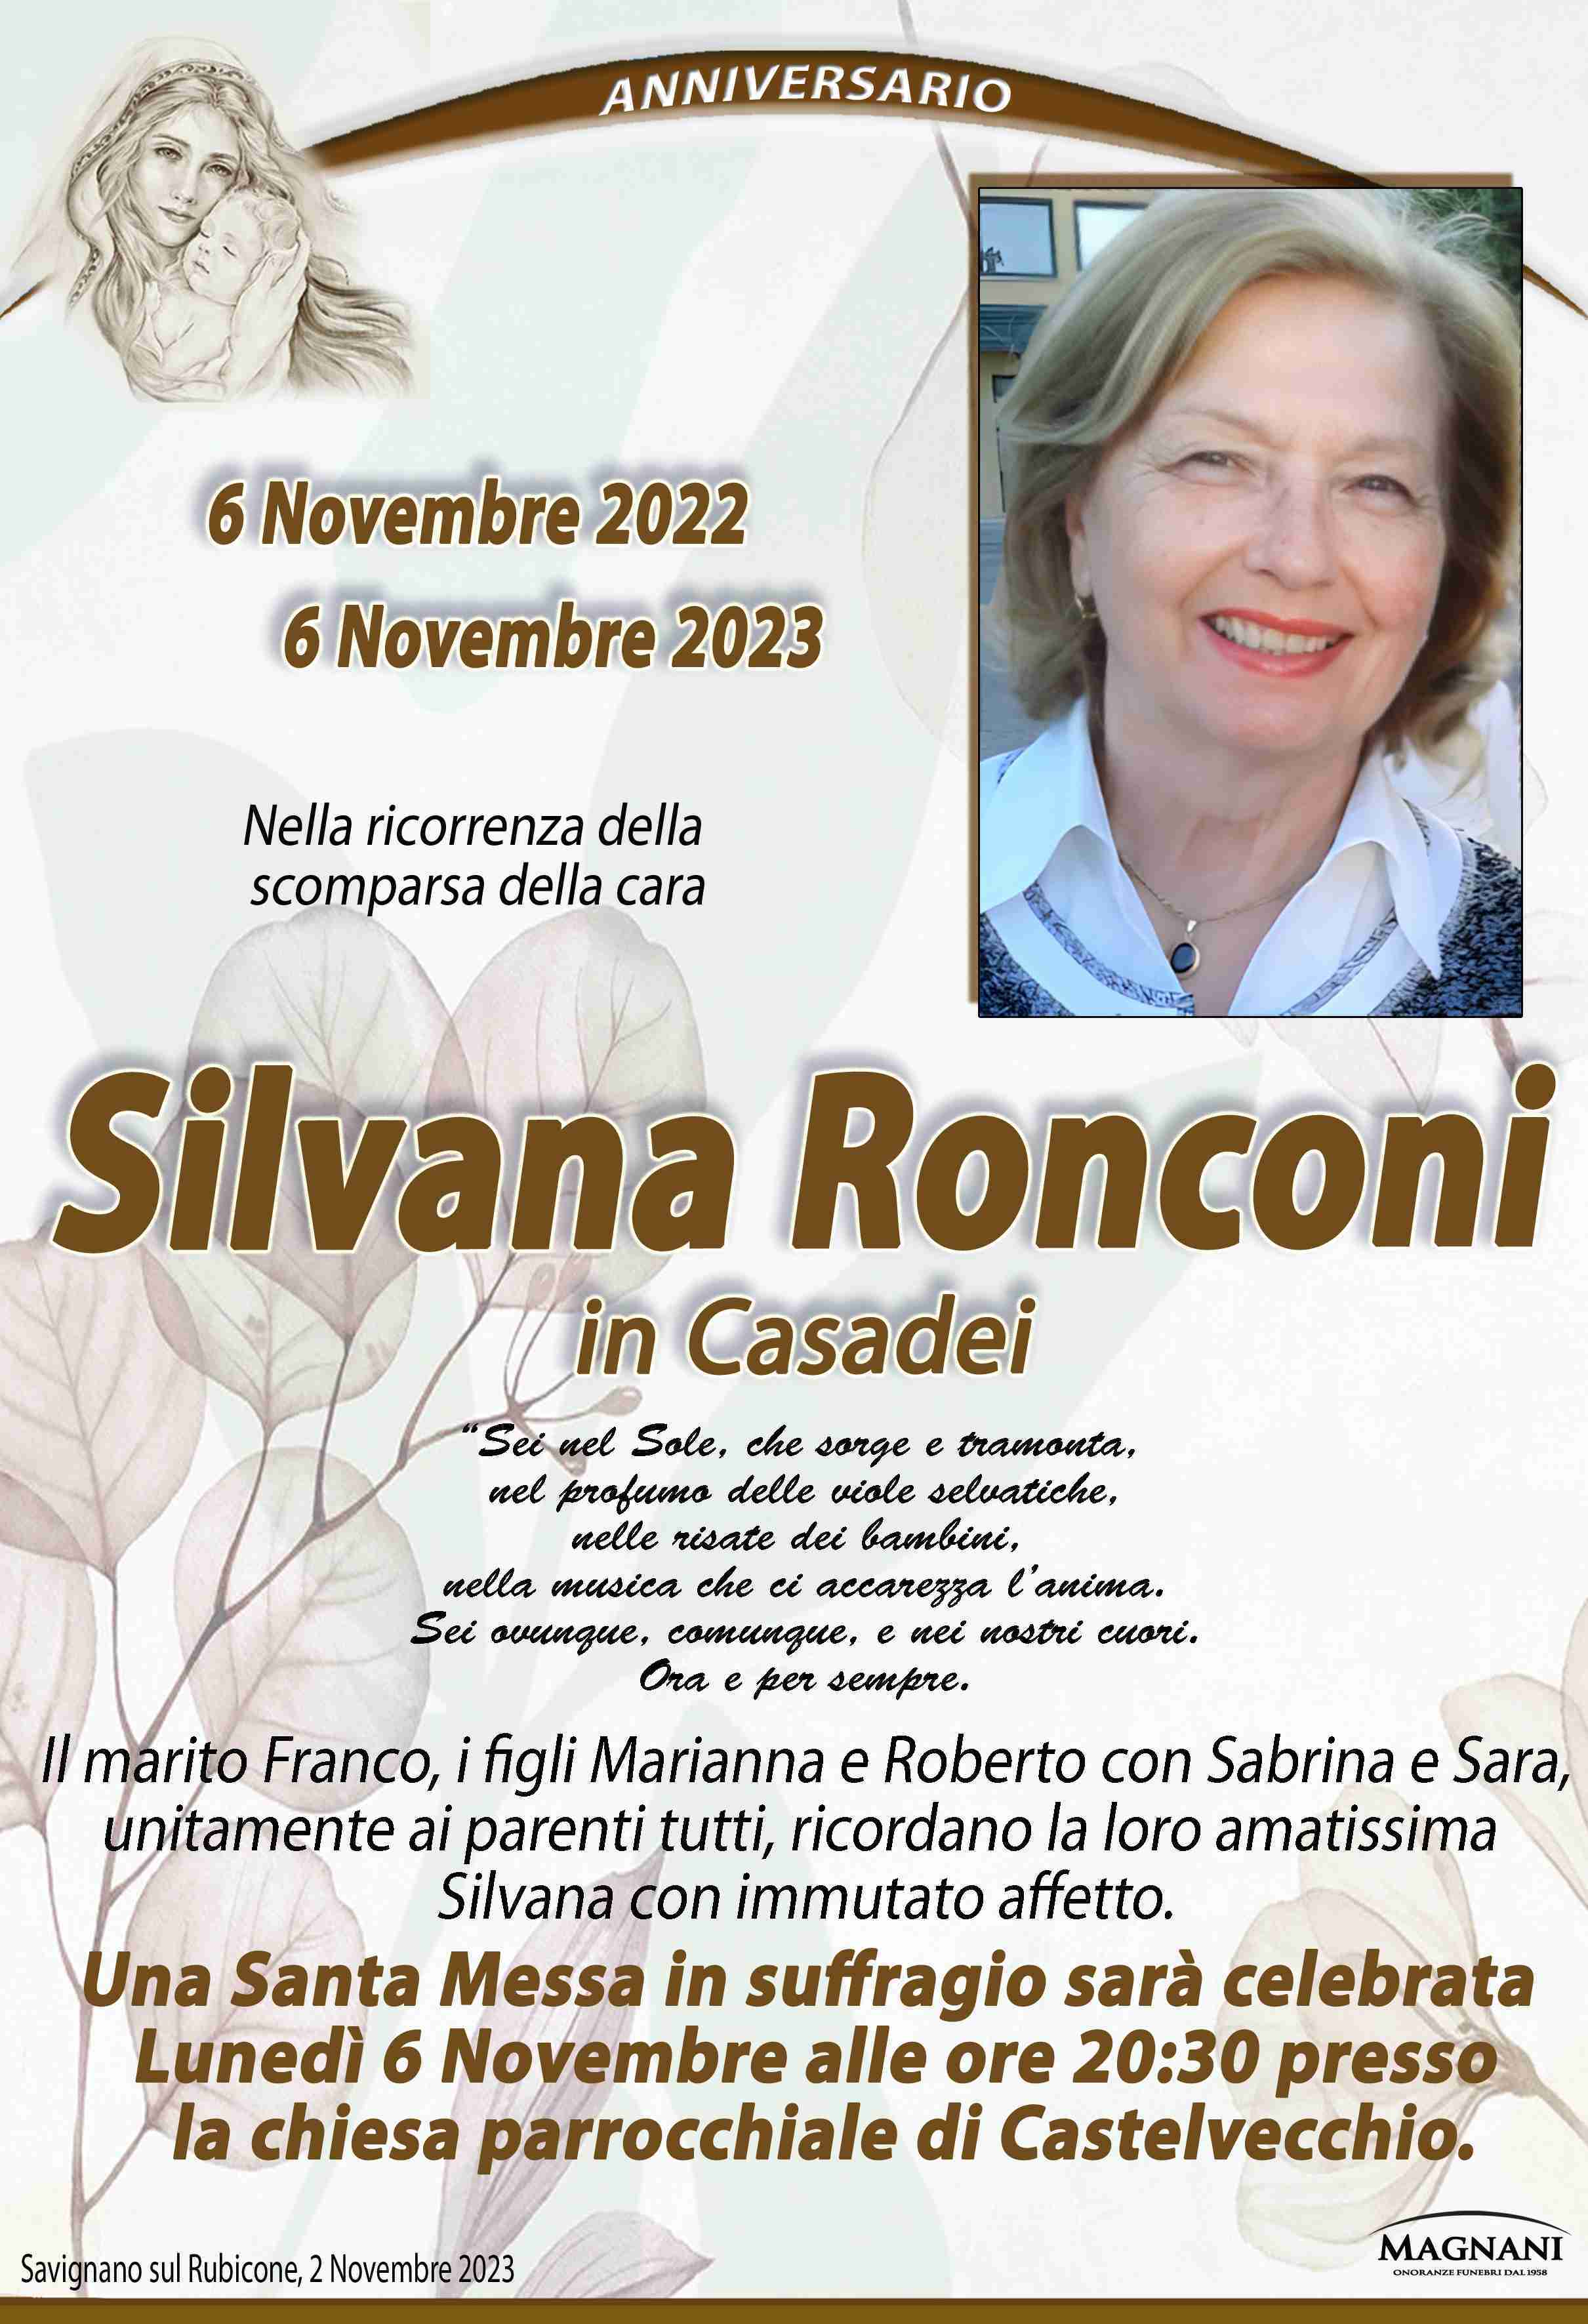 Silvana Ronconi